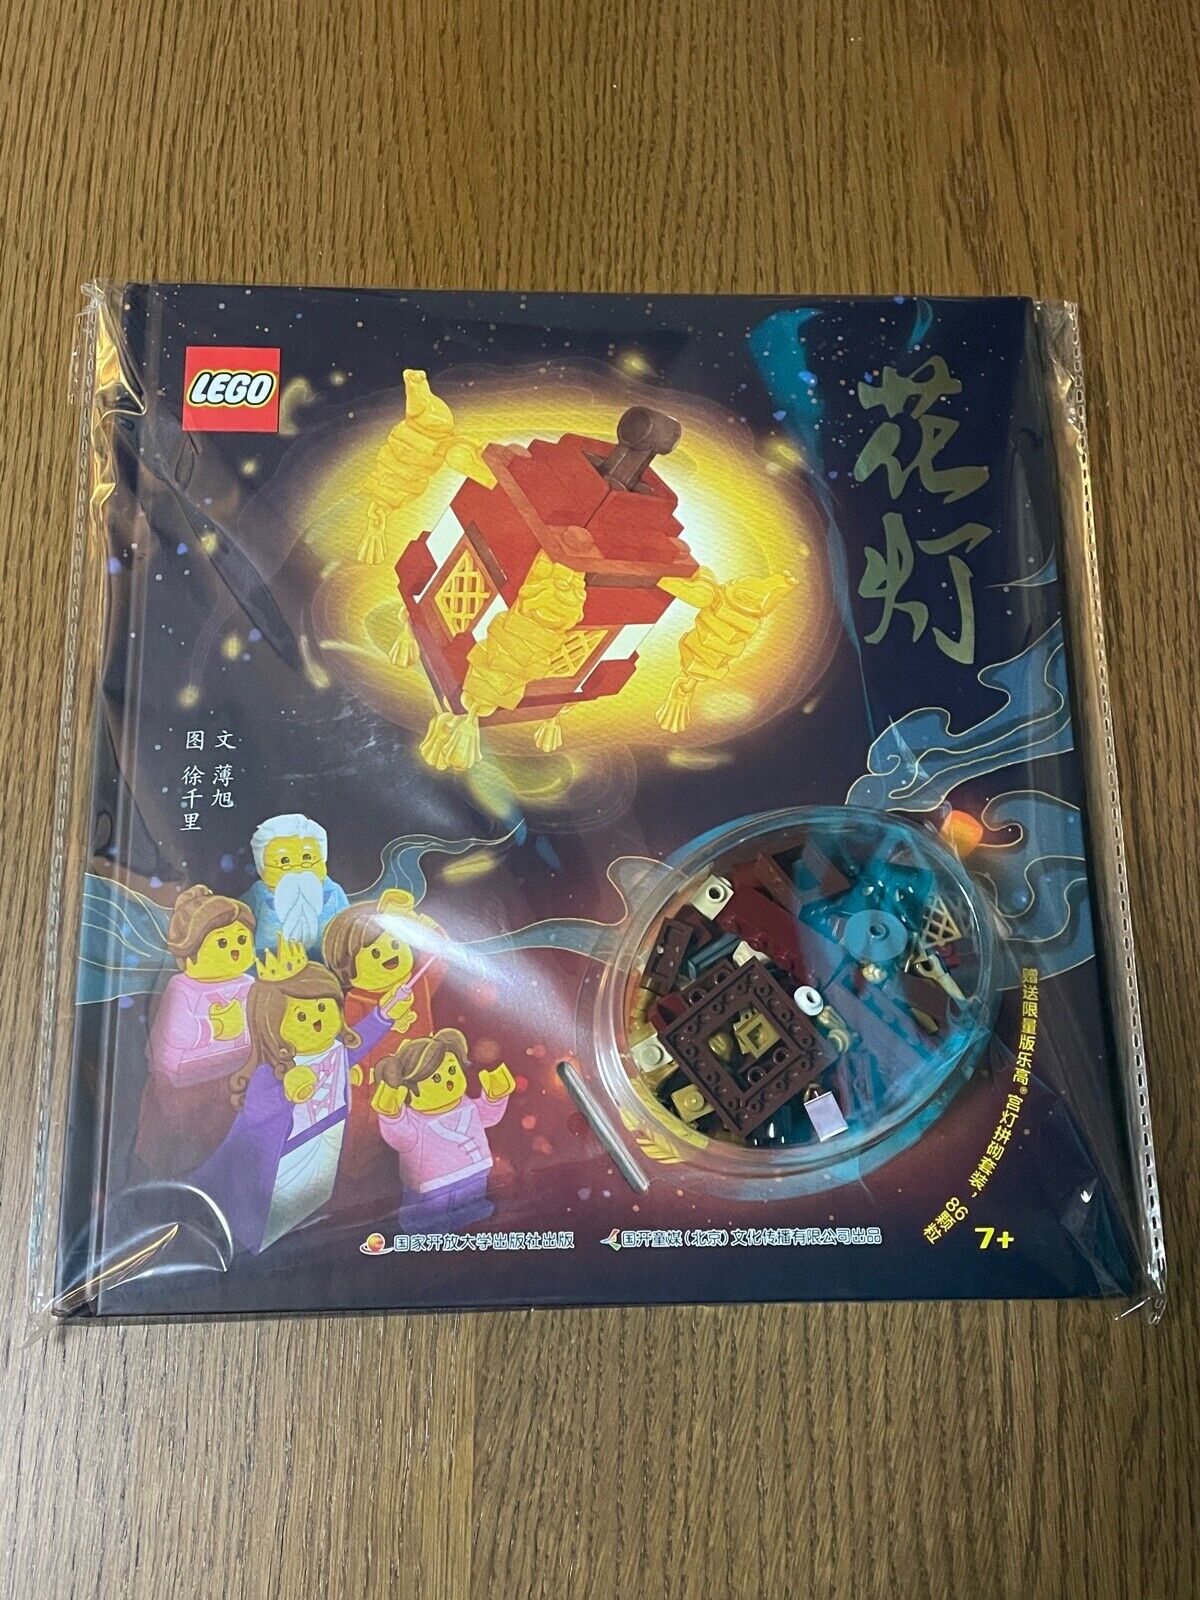 2022 China Version LEGO Story of “Palace Lantern” Book 